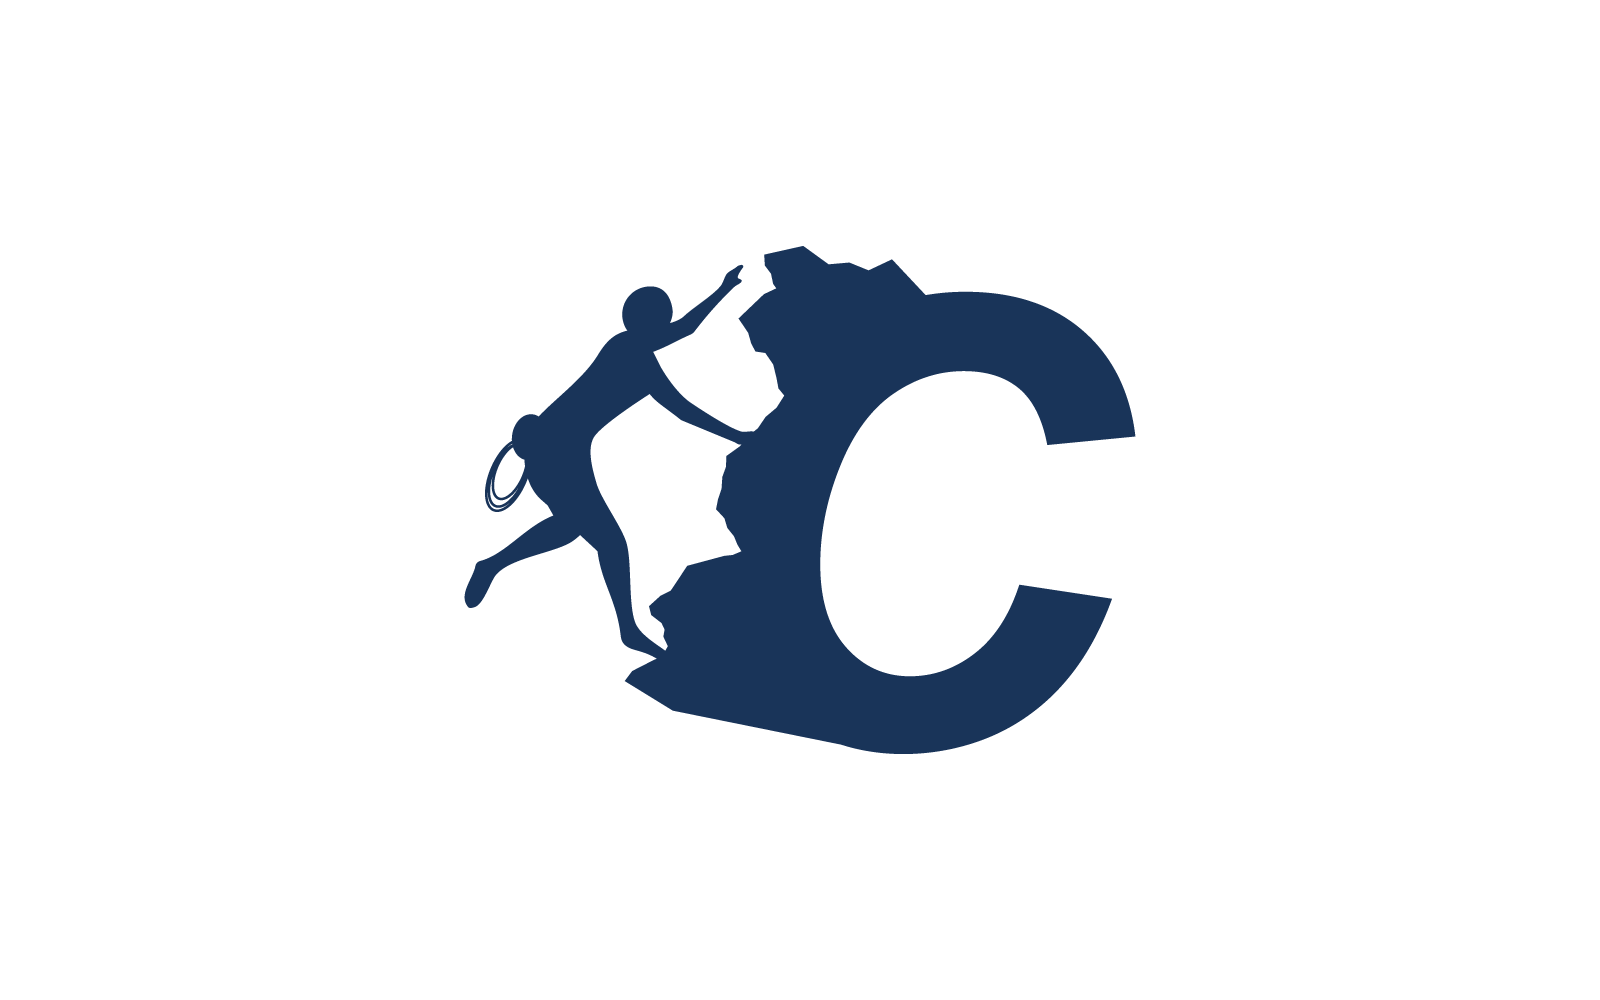 Rock climber logo with alphabet vector design template